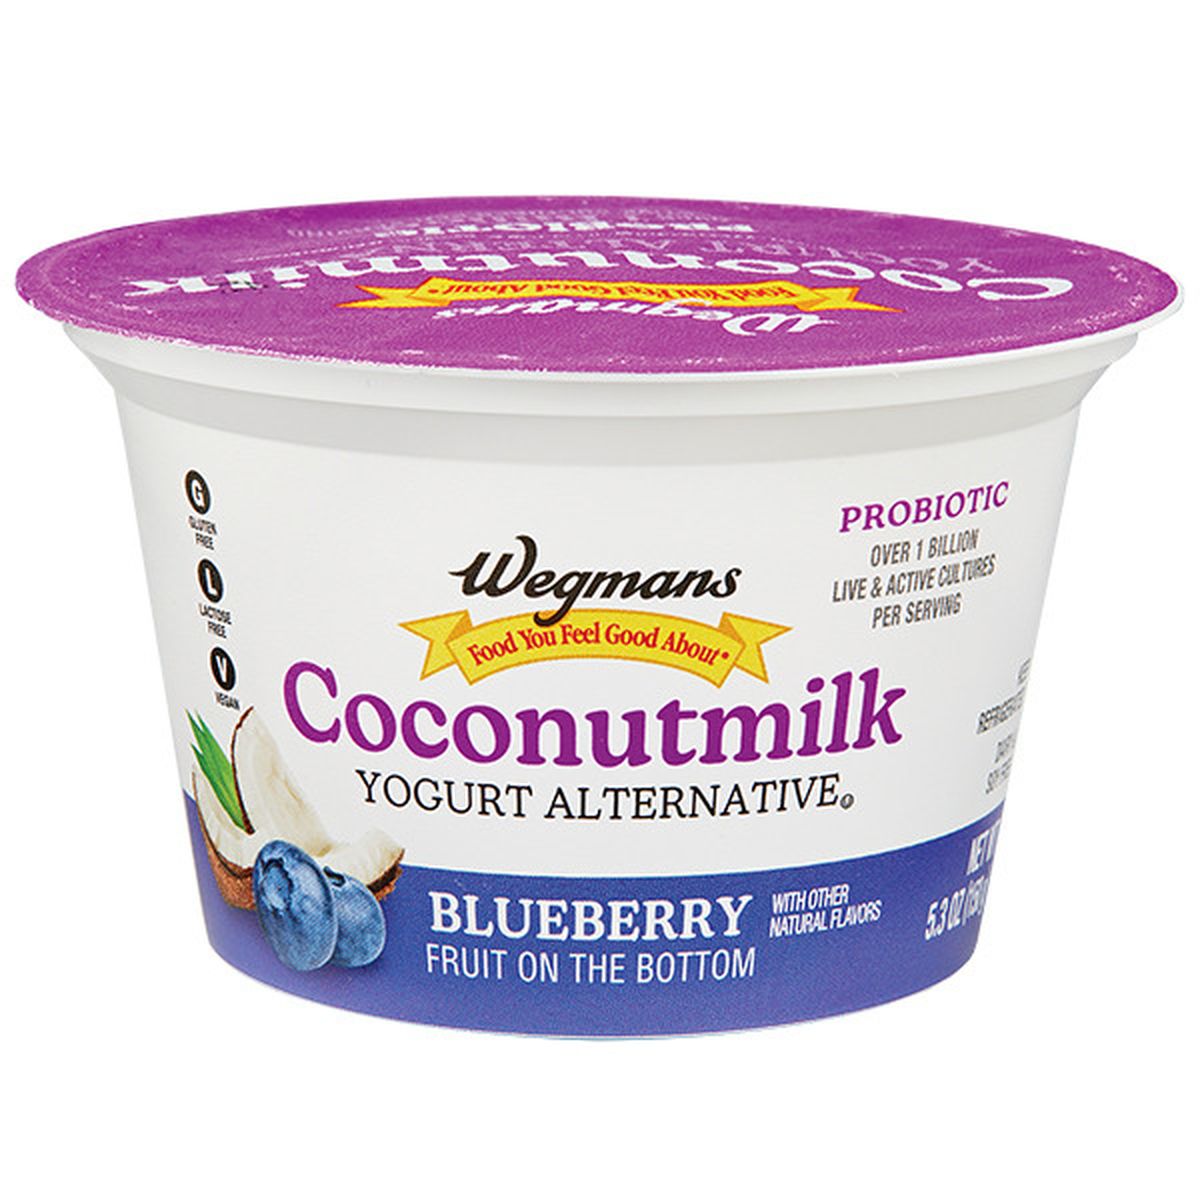 Calories in Wegmans Coconutmilk Yogurt Alternative, Blueberry